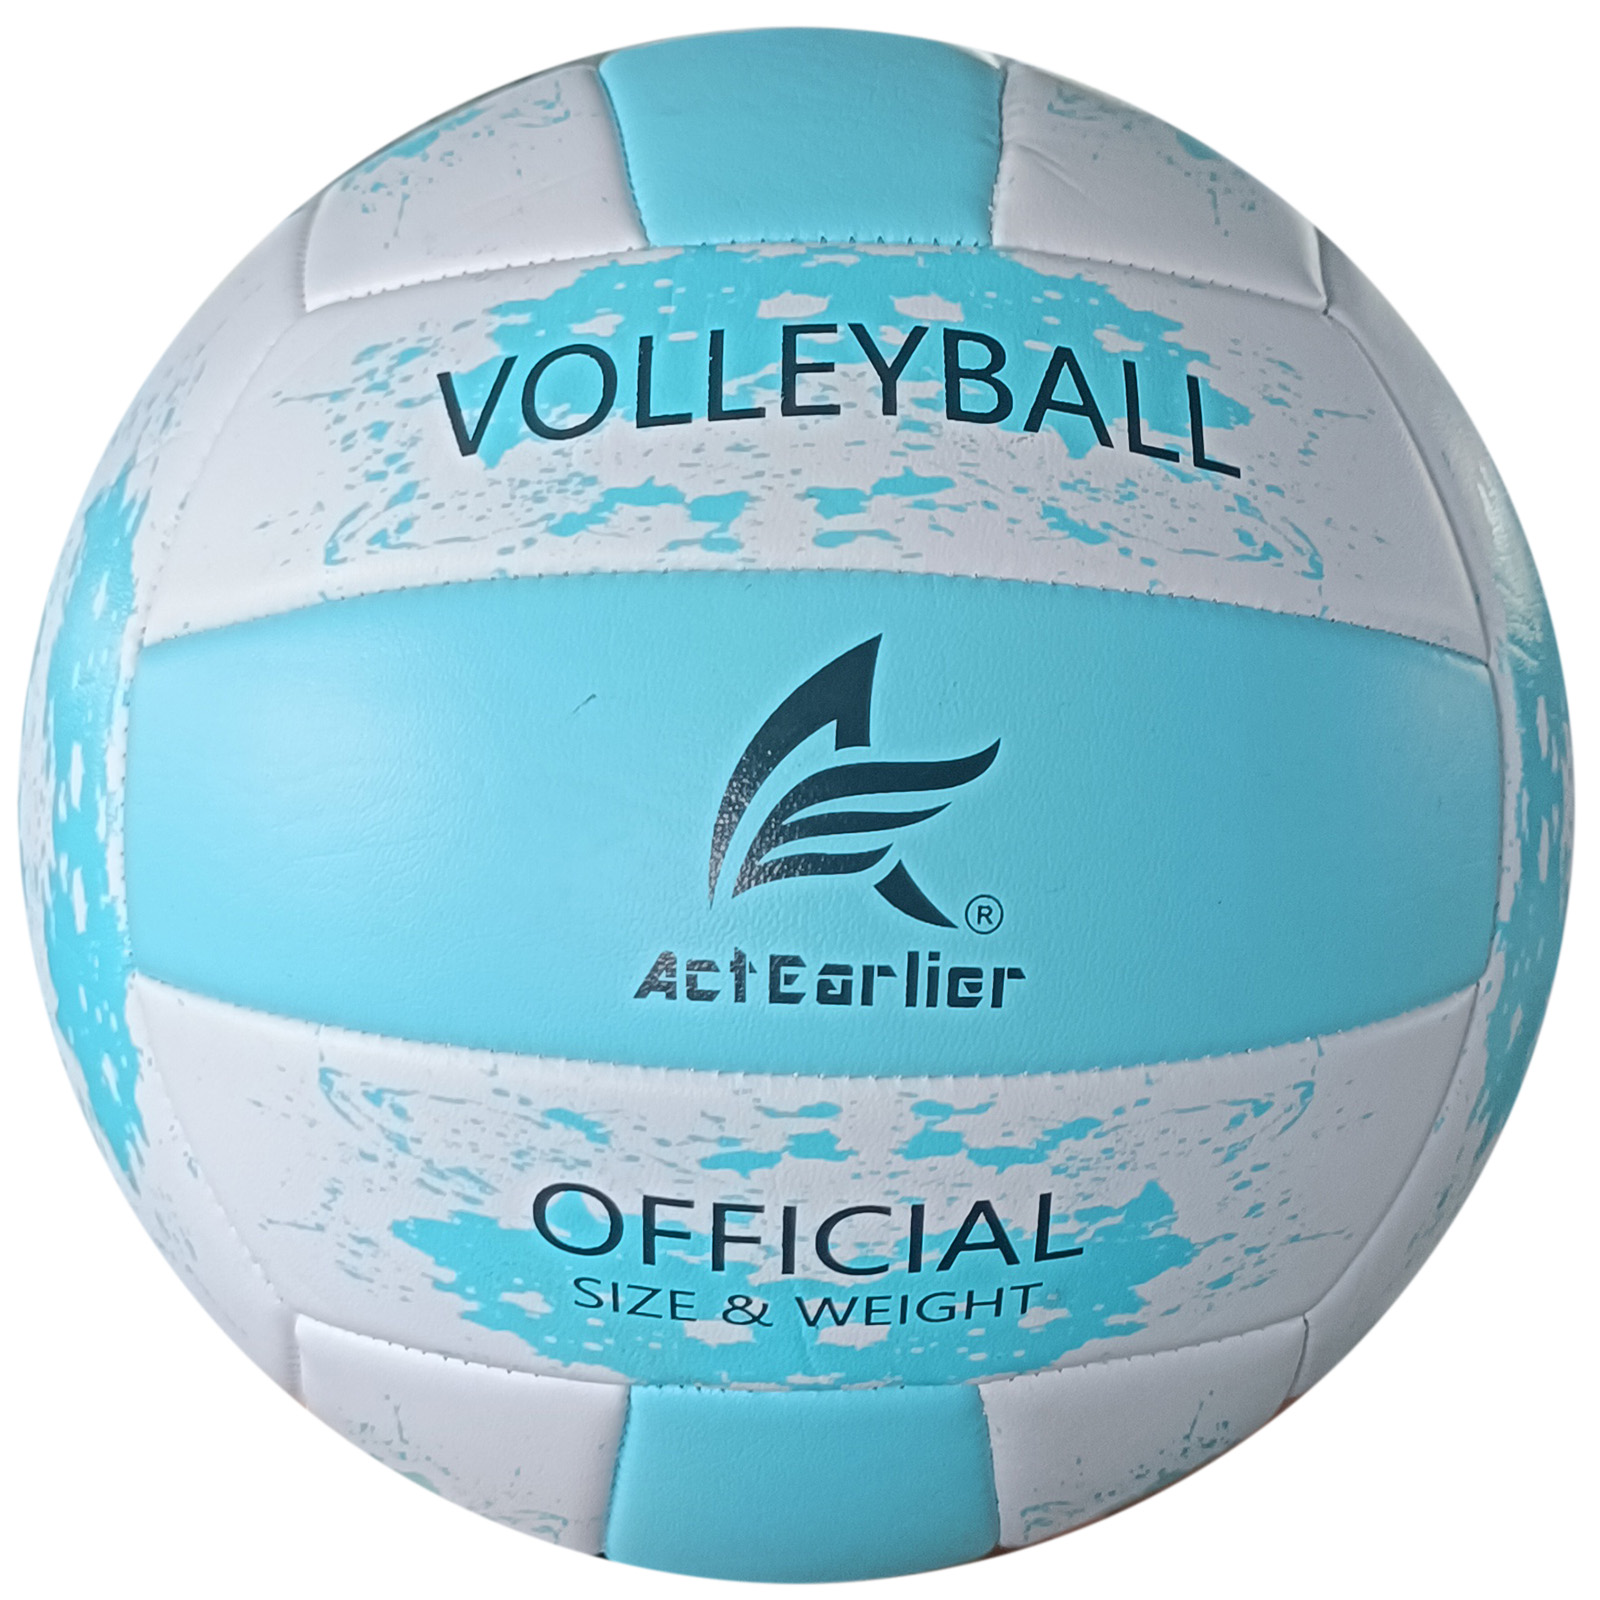 actearlier: China supplier of soccer ball, football, basketball, volleyball